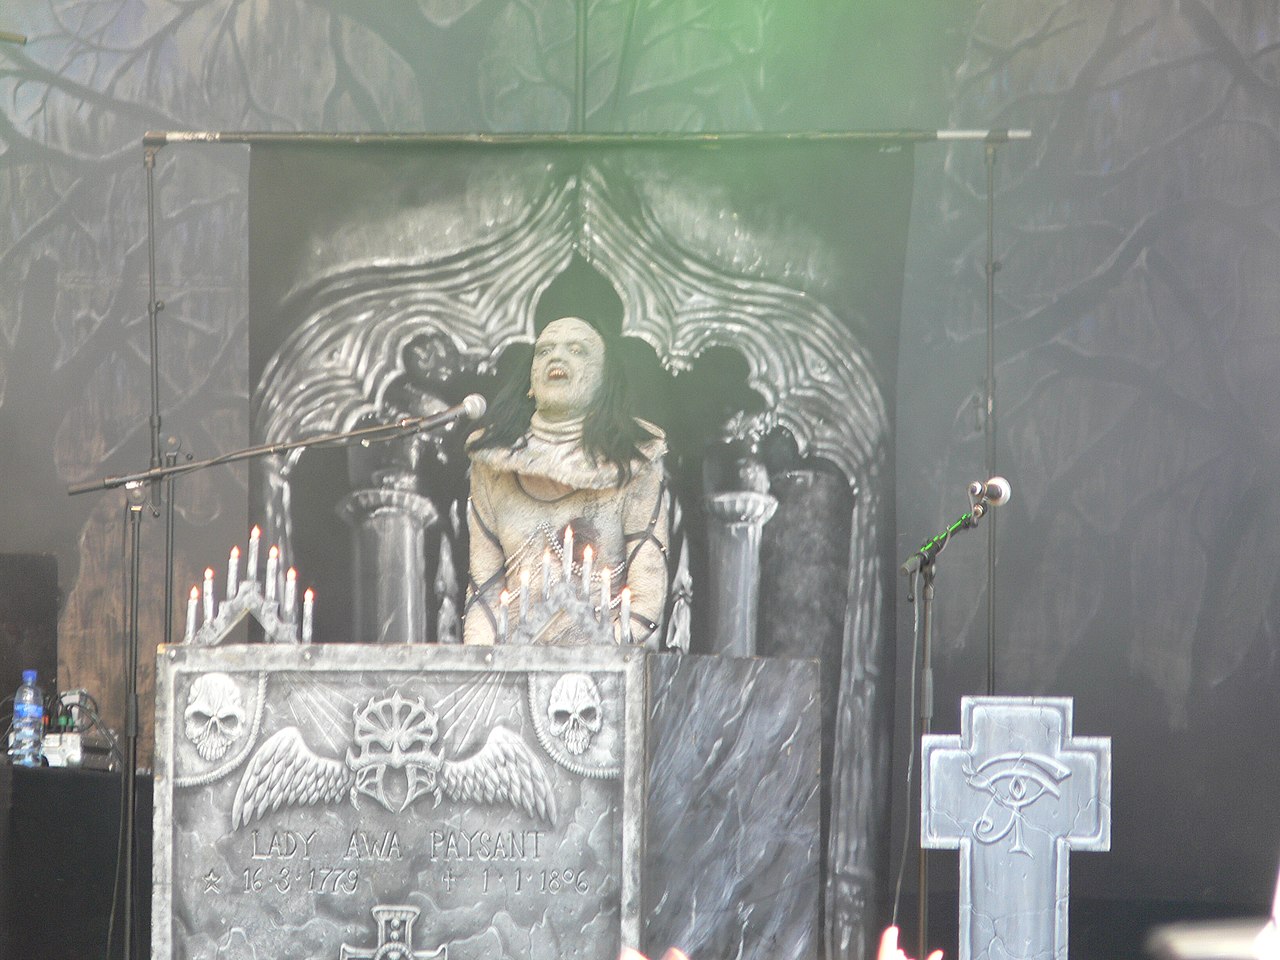 Leena Peisa as Awa, performing with Lordi in 2006